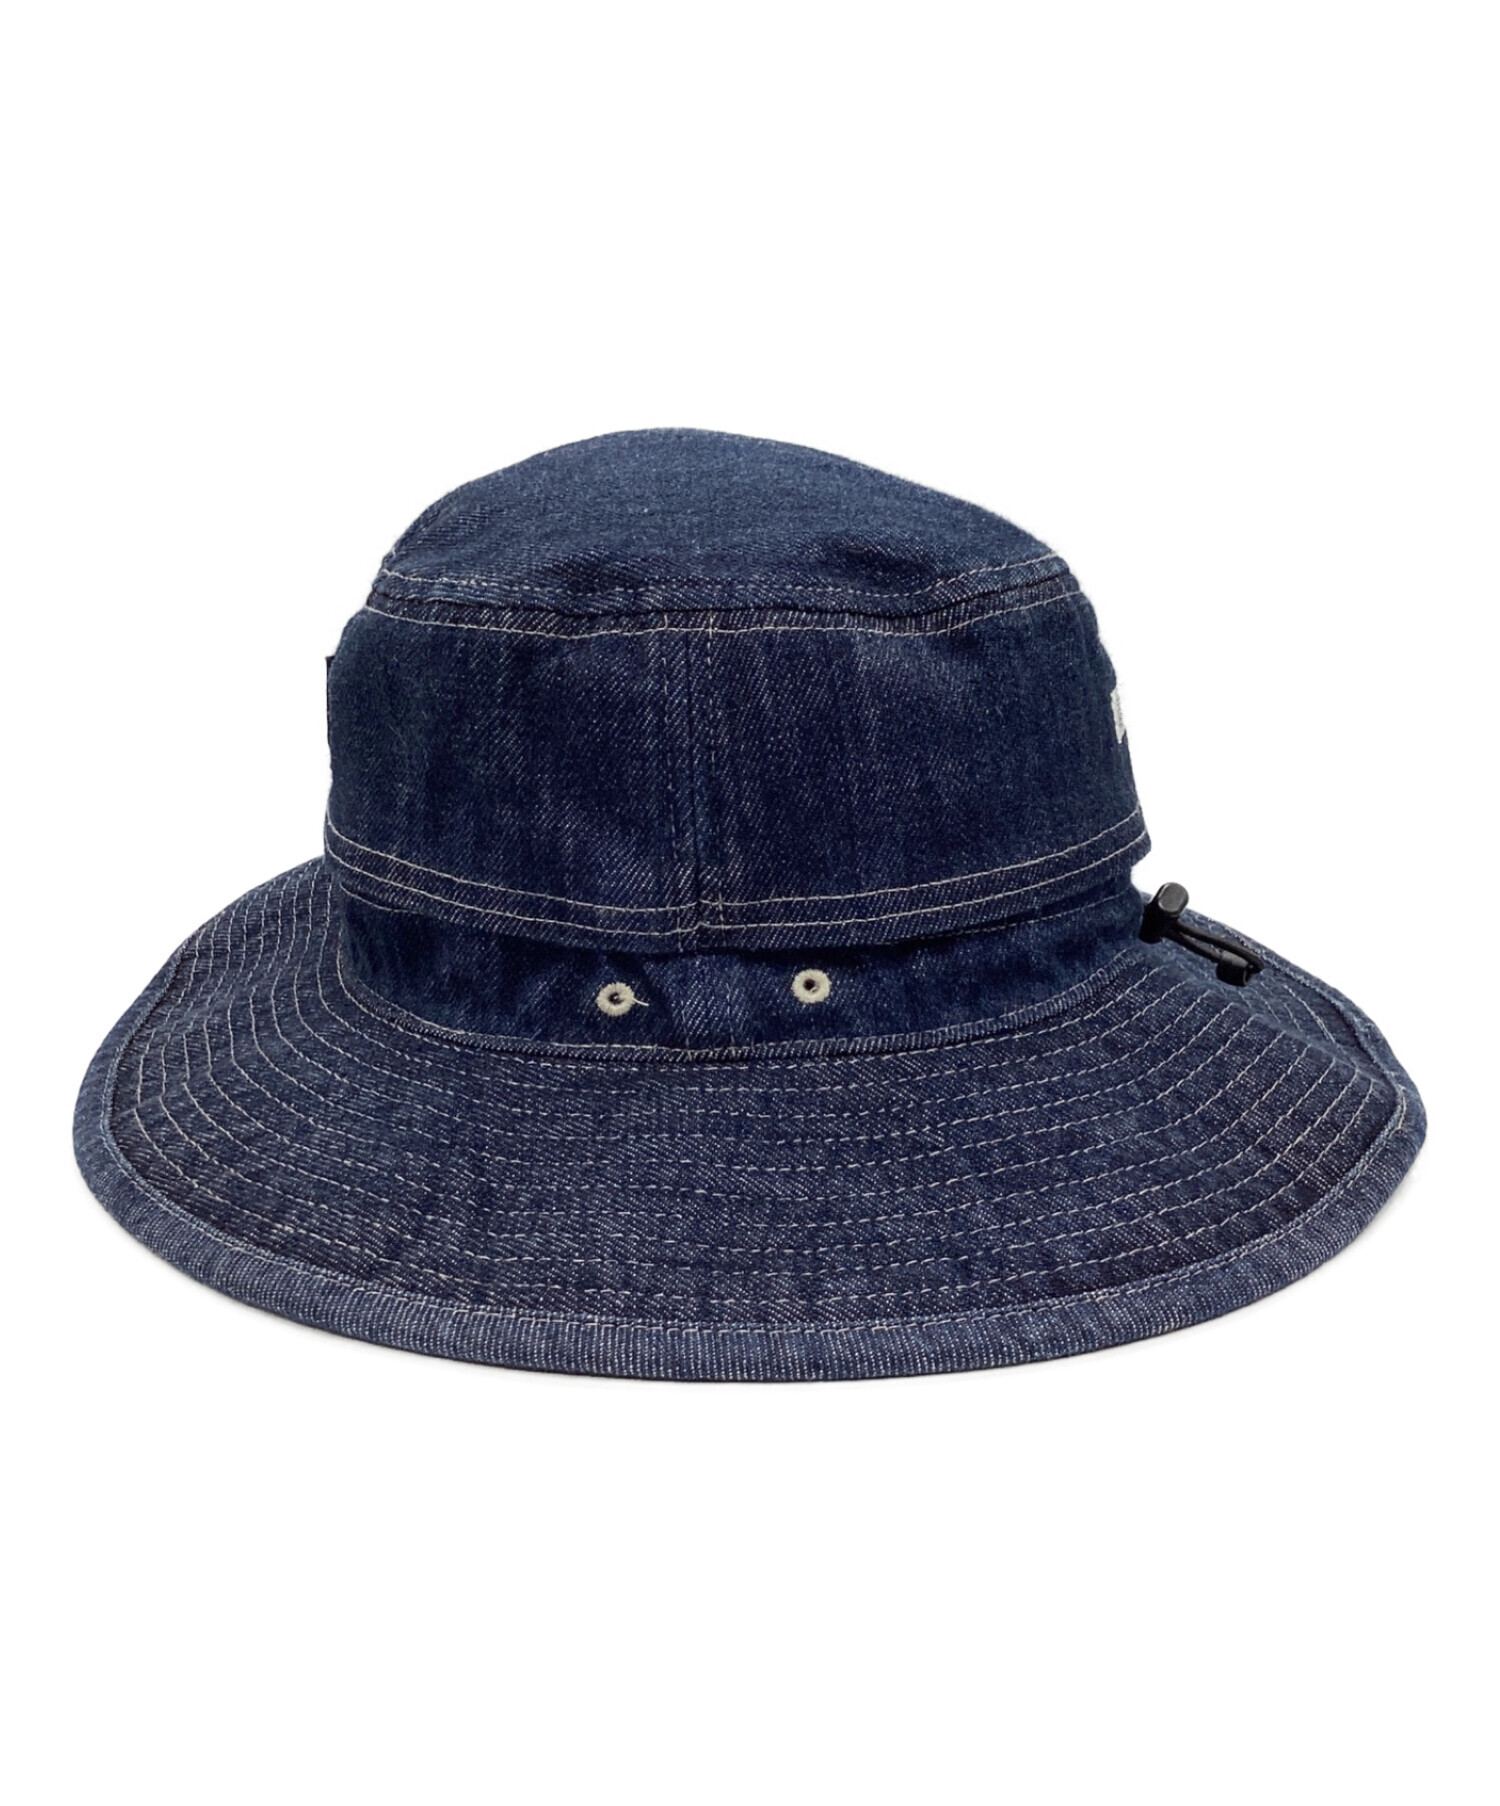 Supreme The North Face Denim Hat L/XL